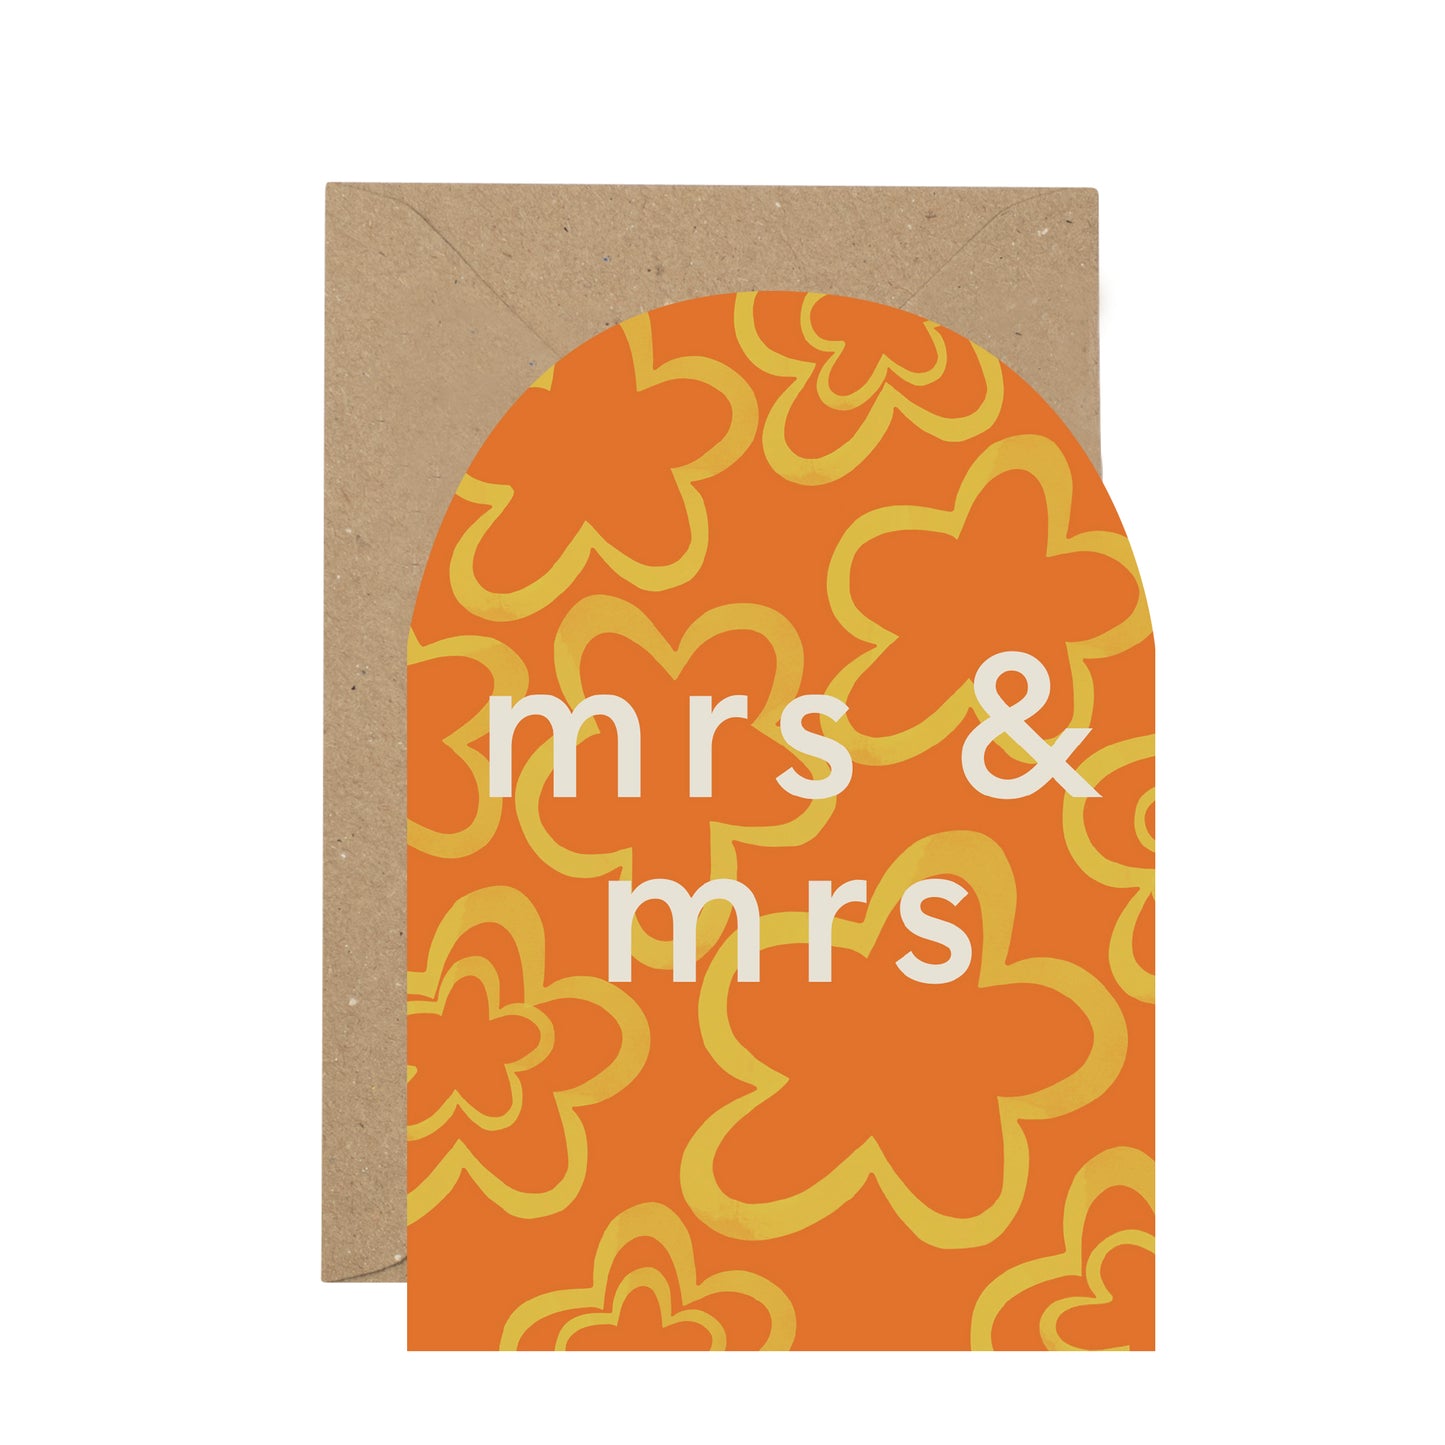 'Mrs & Mrs' wedding curved card